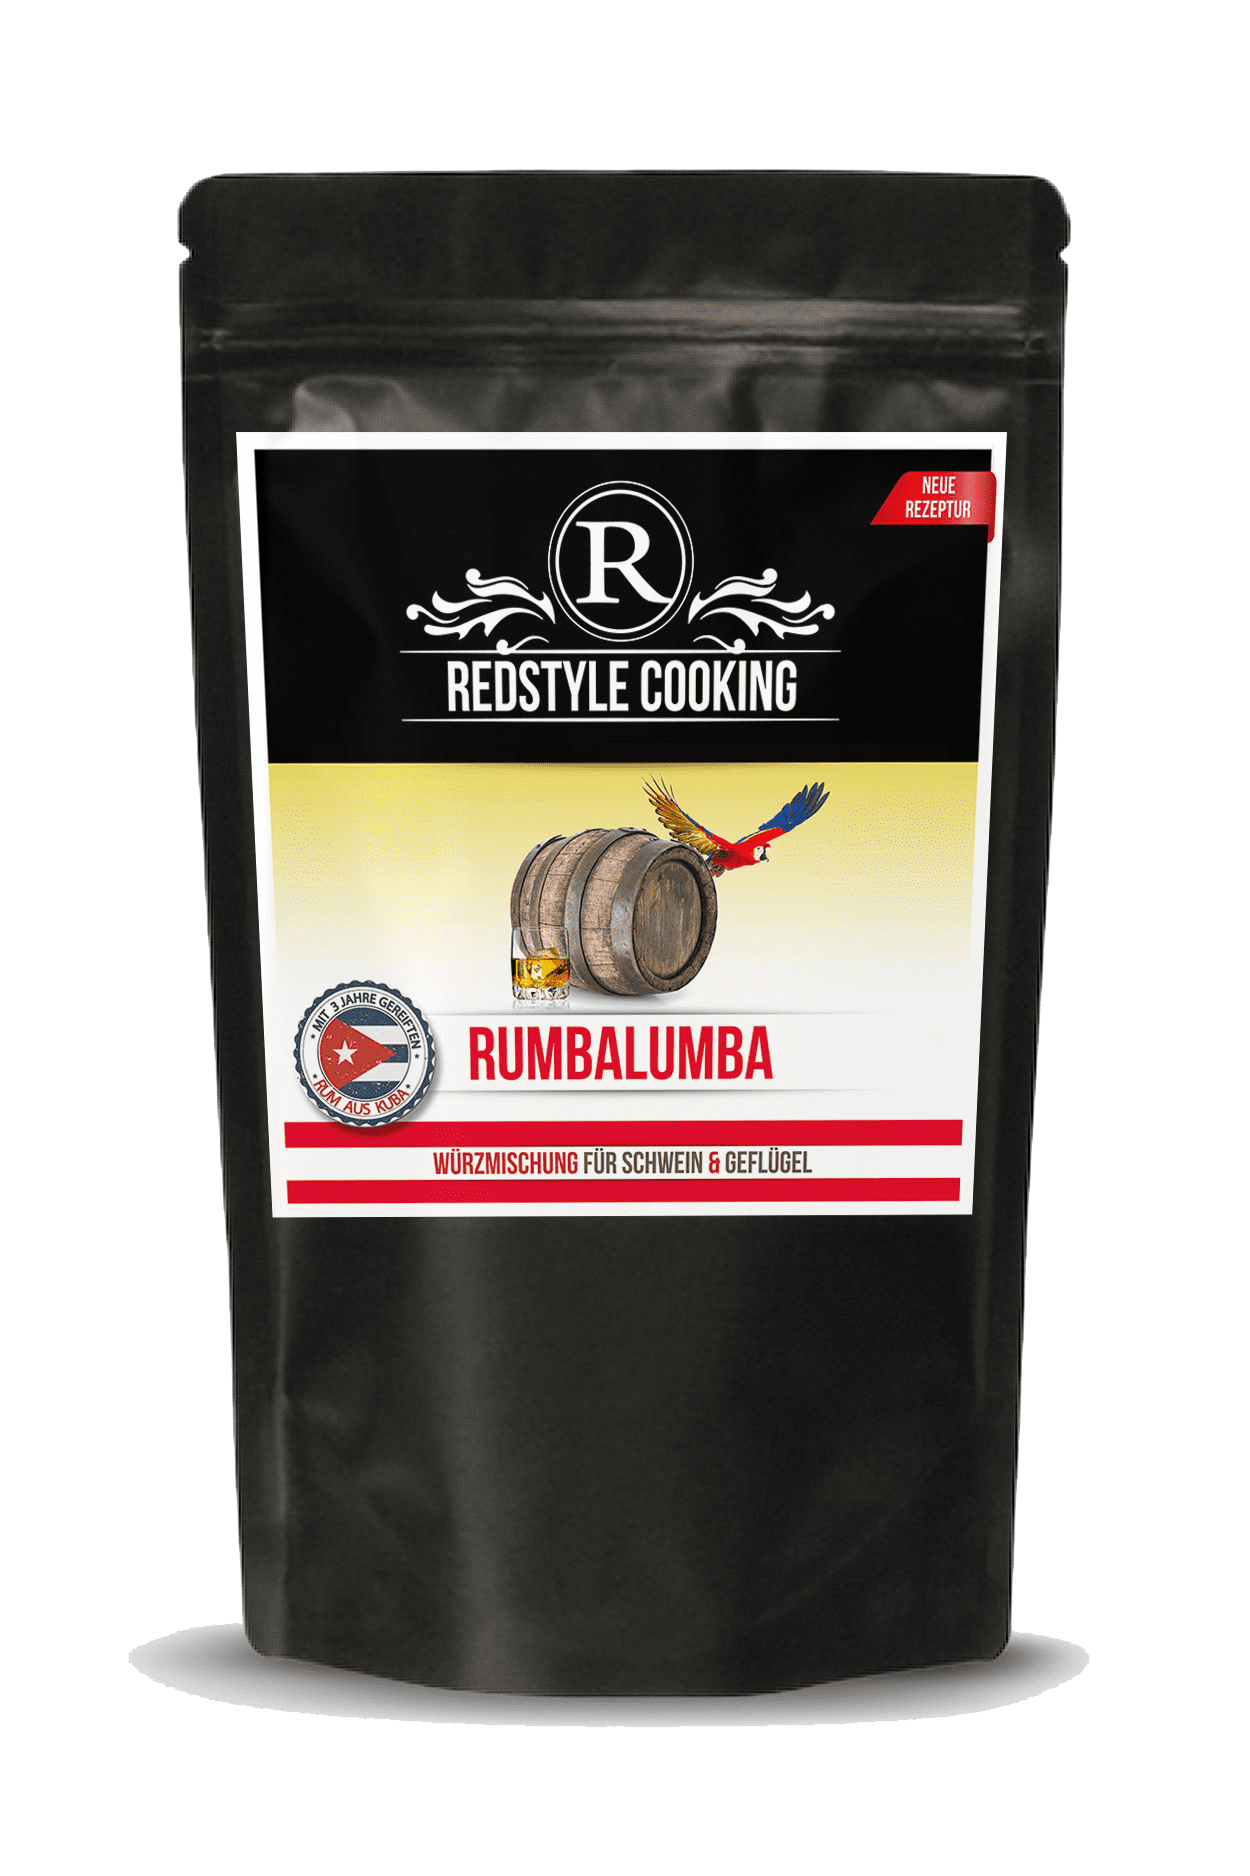 Rumbalumba, Redstyle Cooking